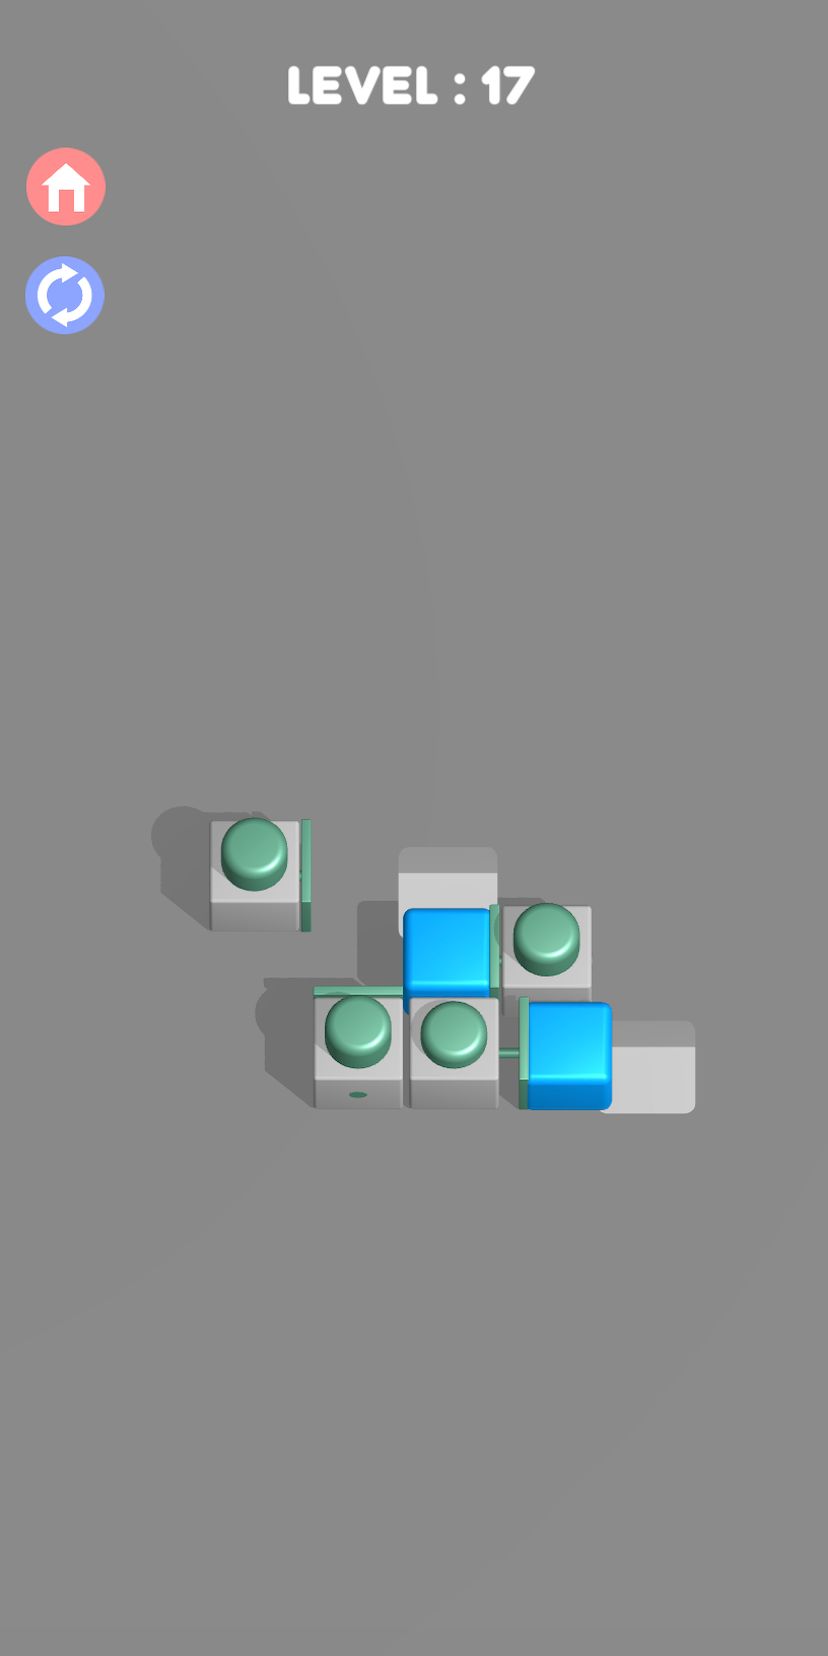 Push them all 3D - Smart block puzzle game screenshot 1